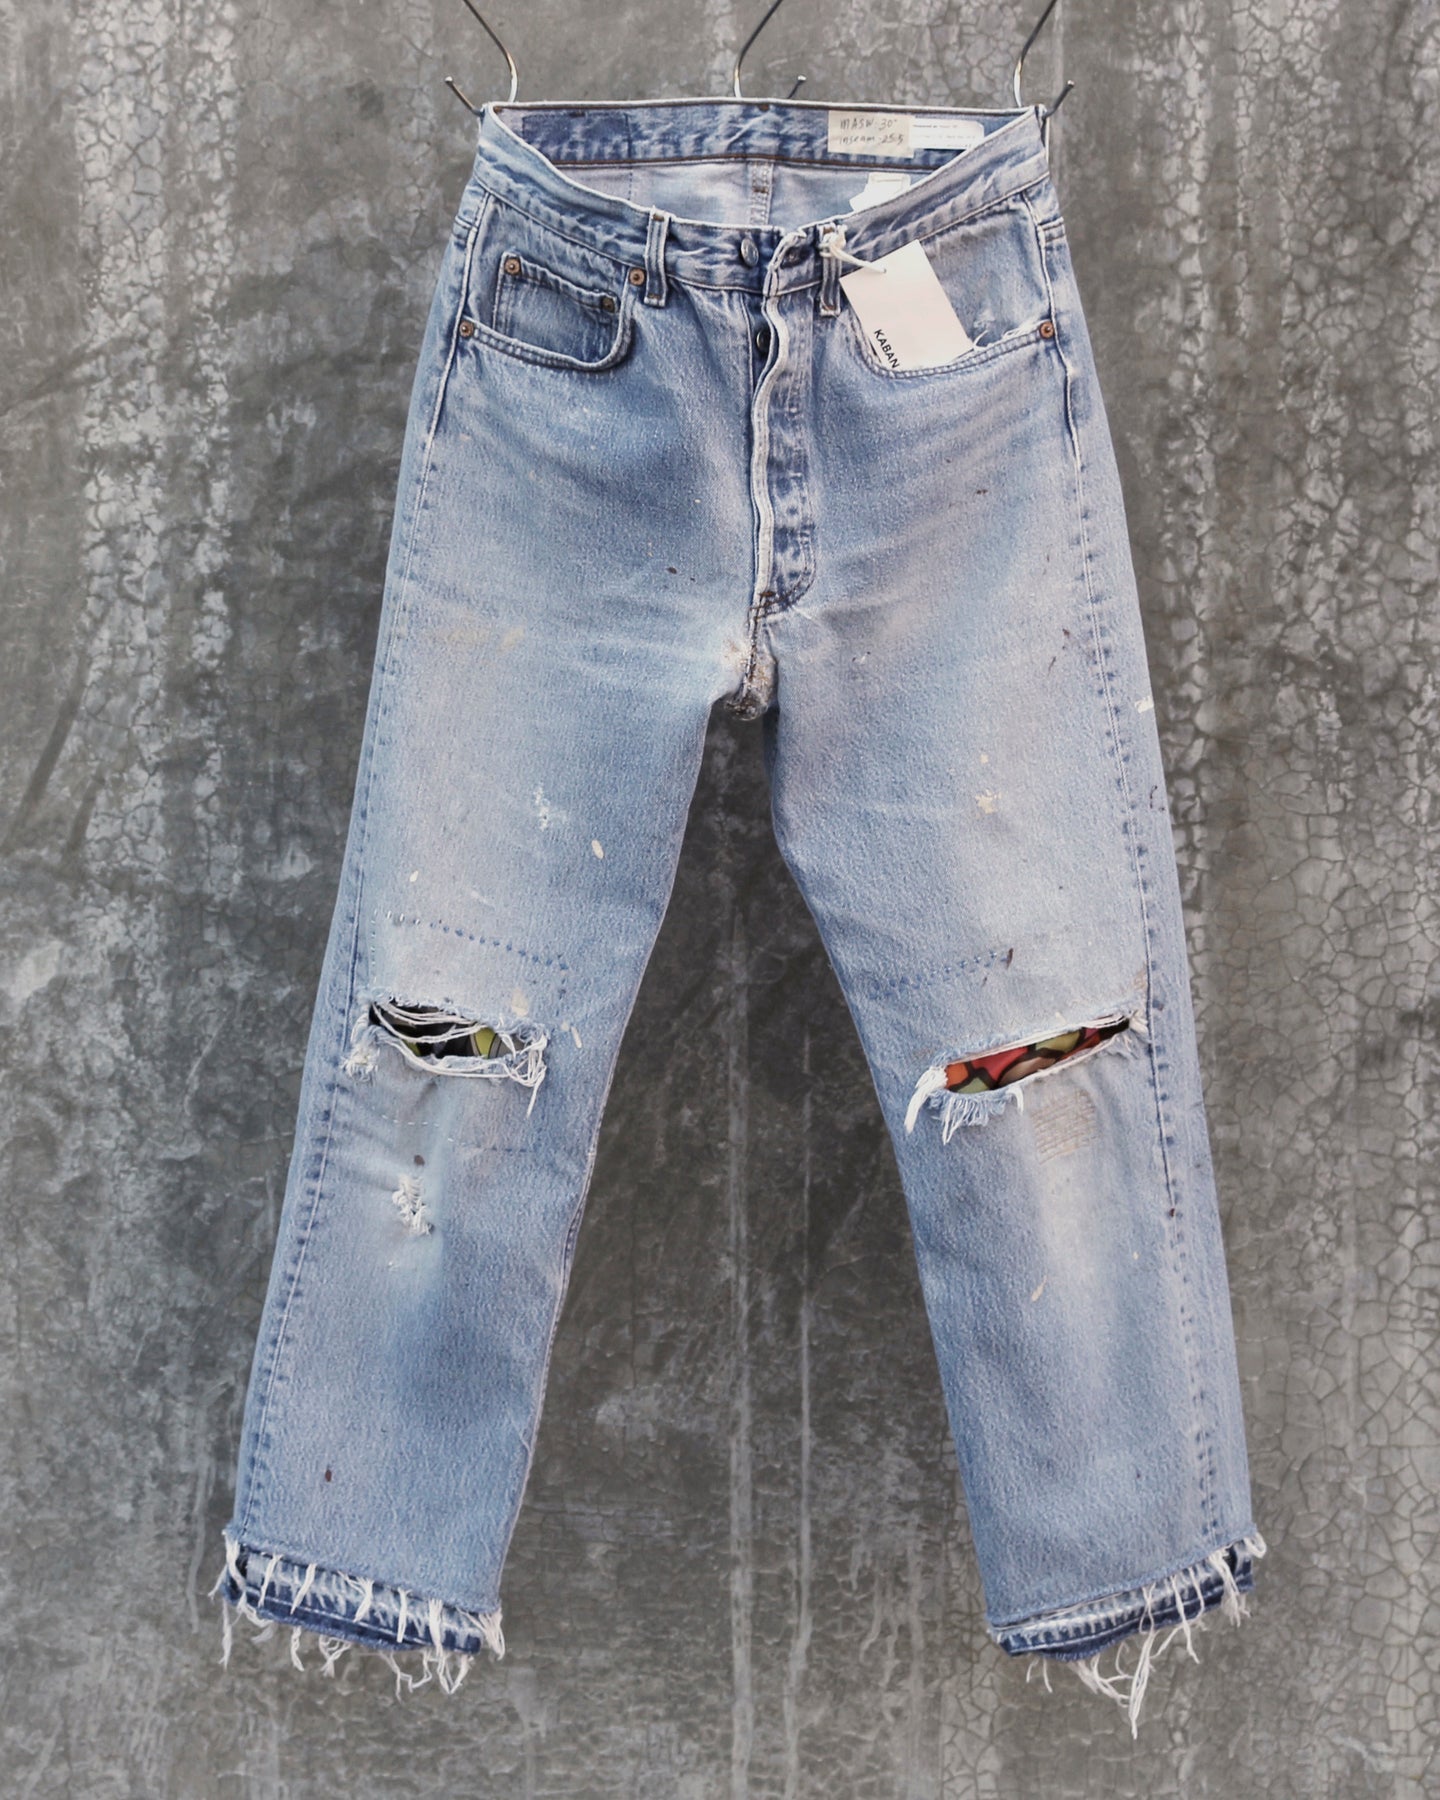 Vintage Levi’s 501, Peek-a-Boo Jeans, fit as women's  size 28